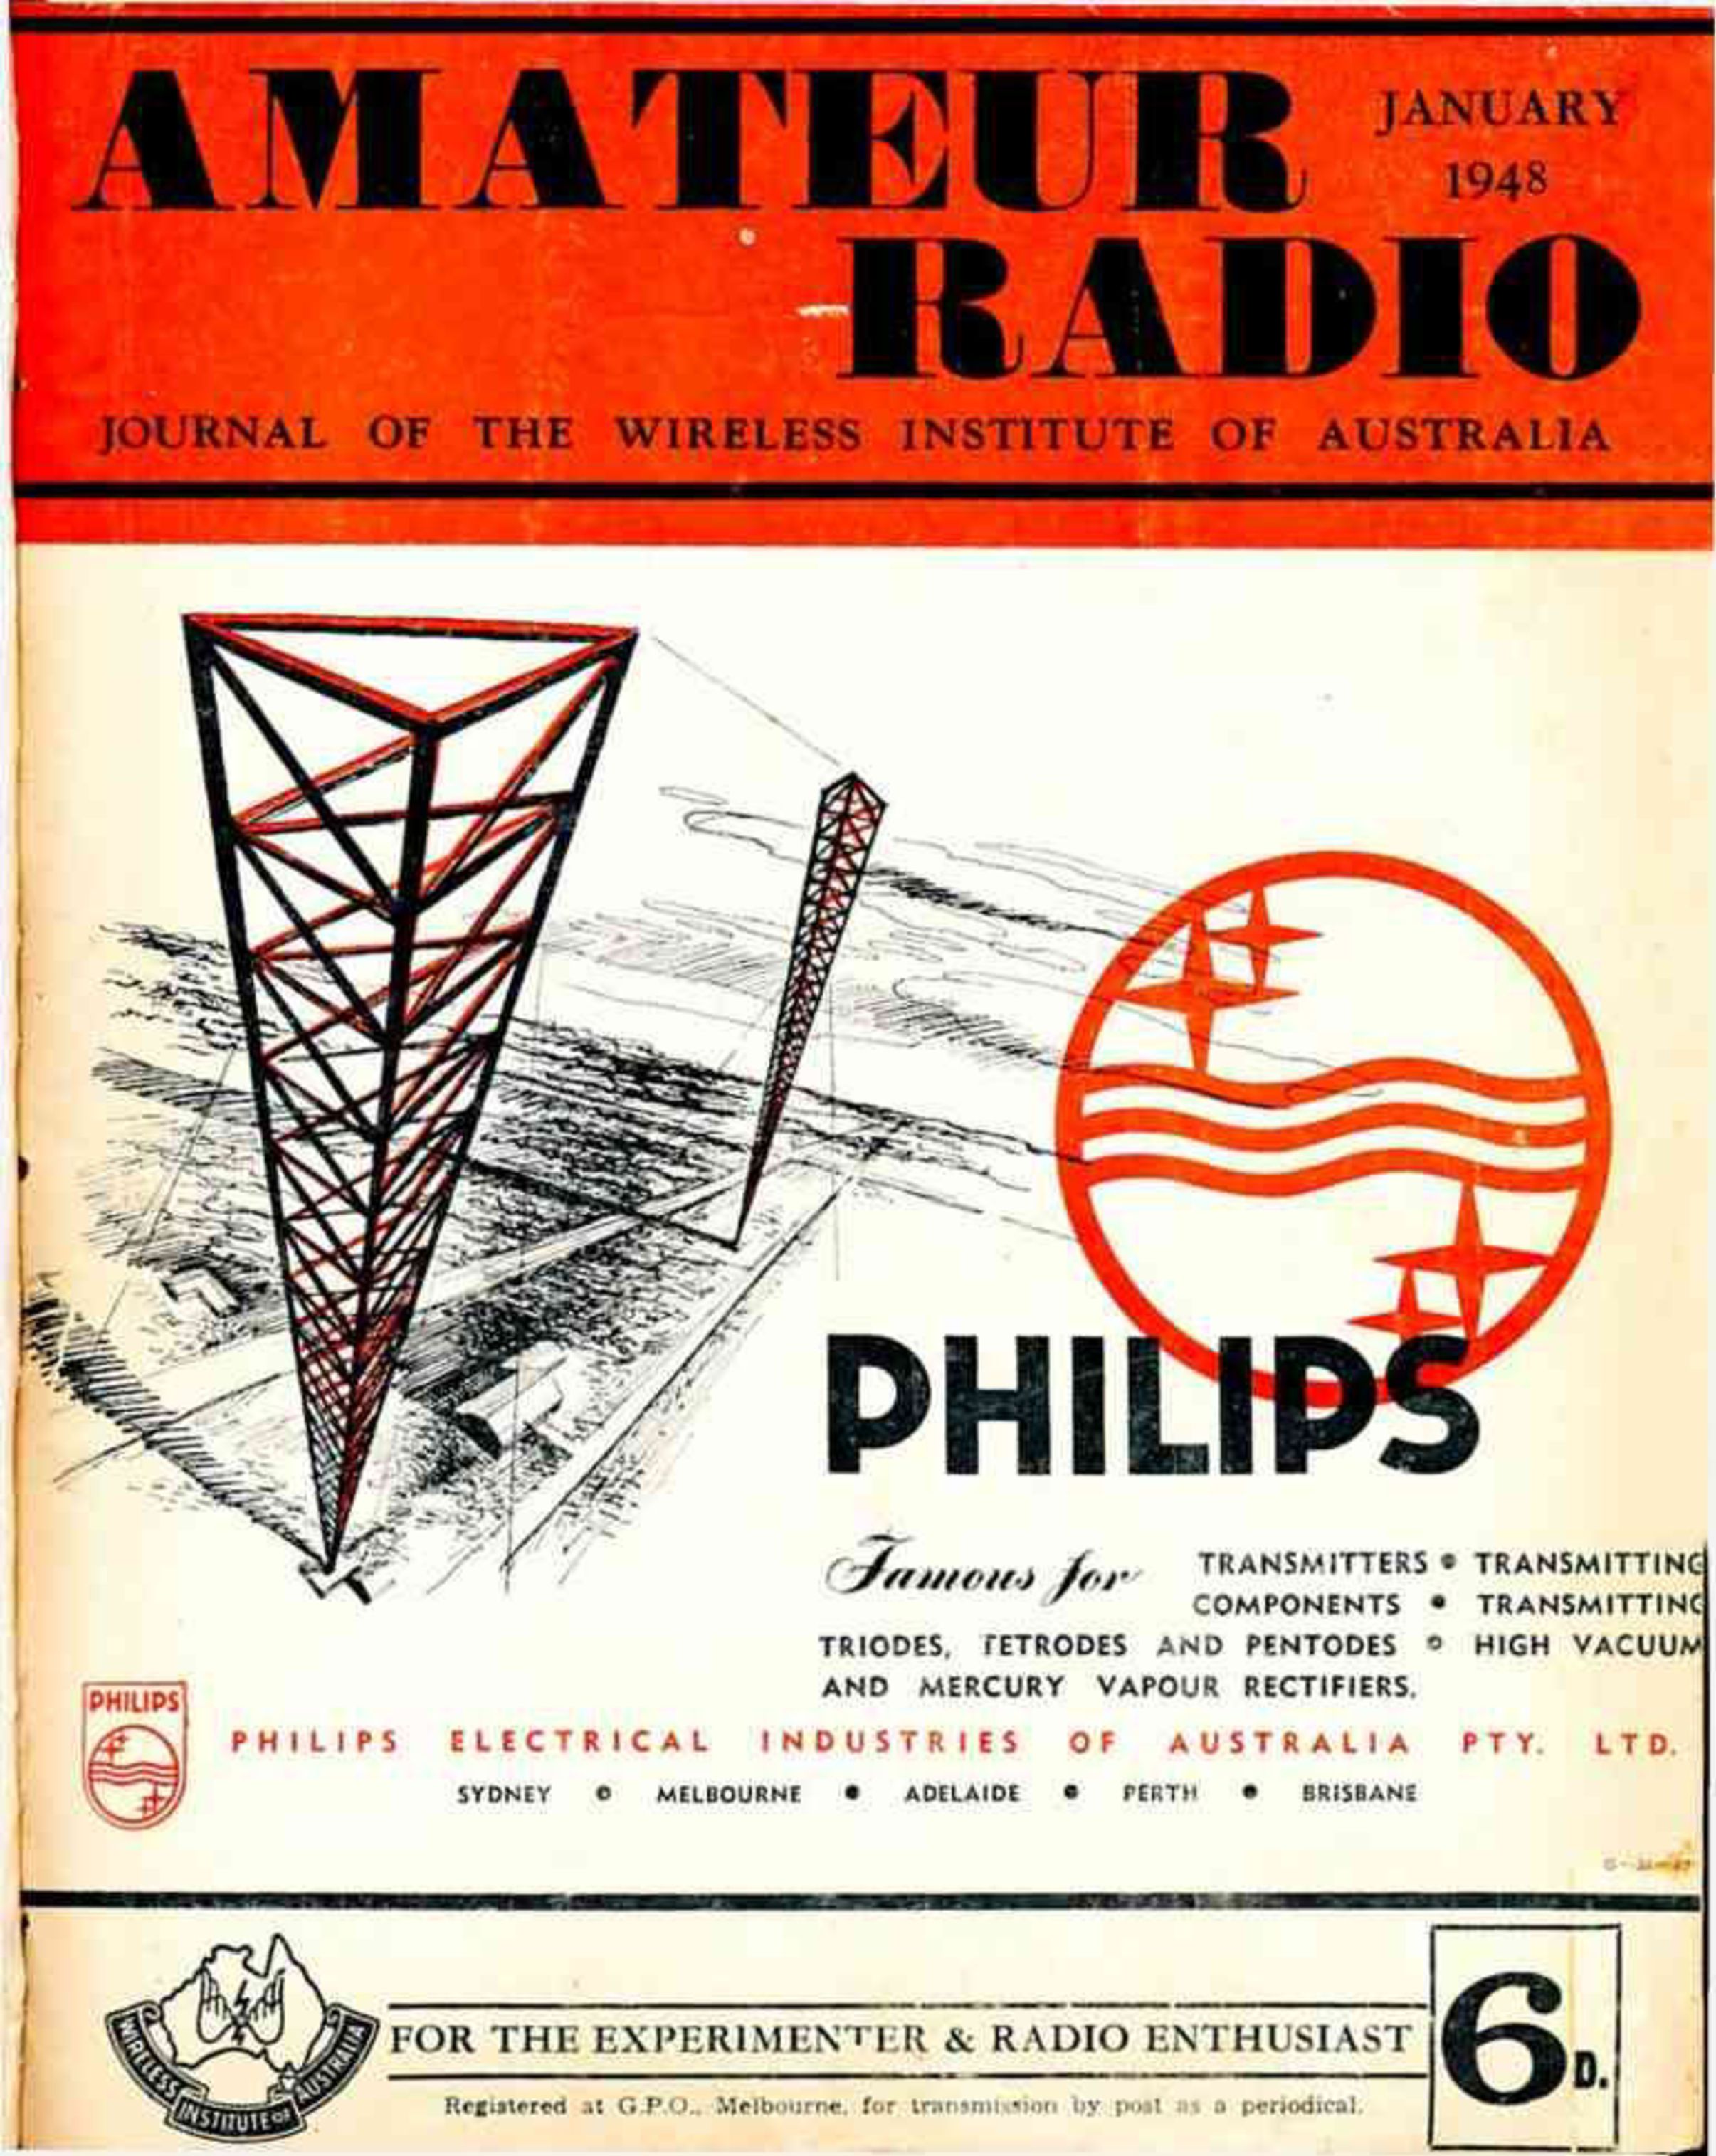 AmateurRadio Jan 1948